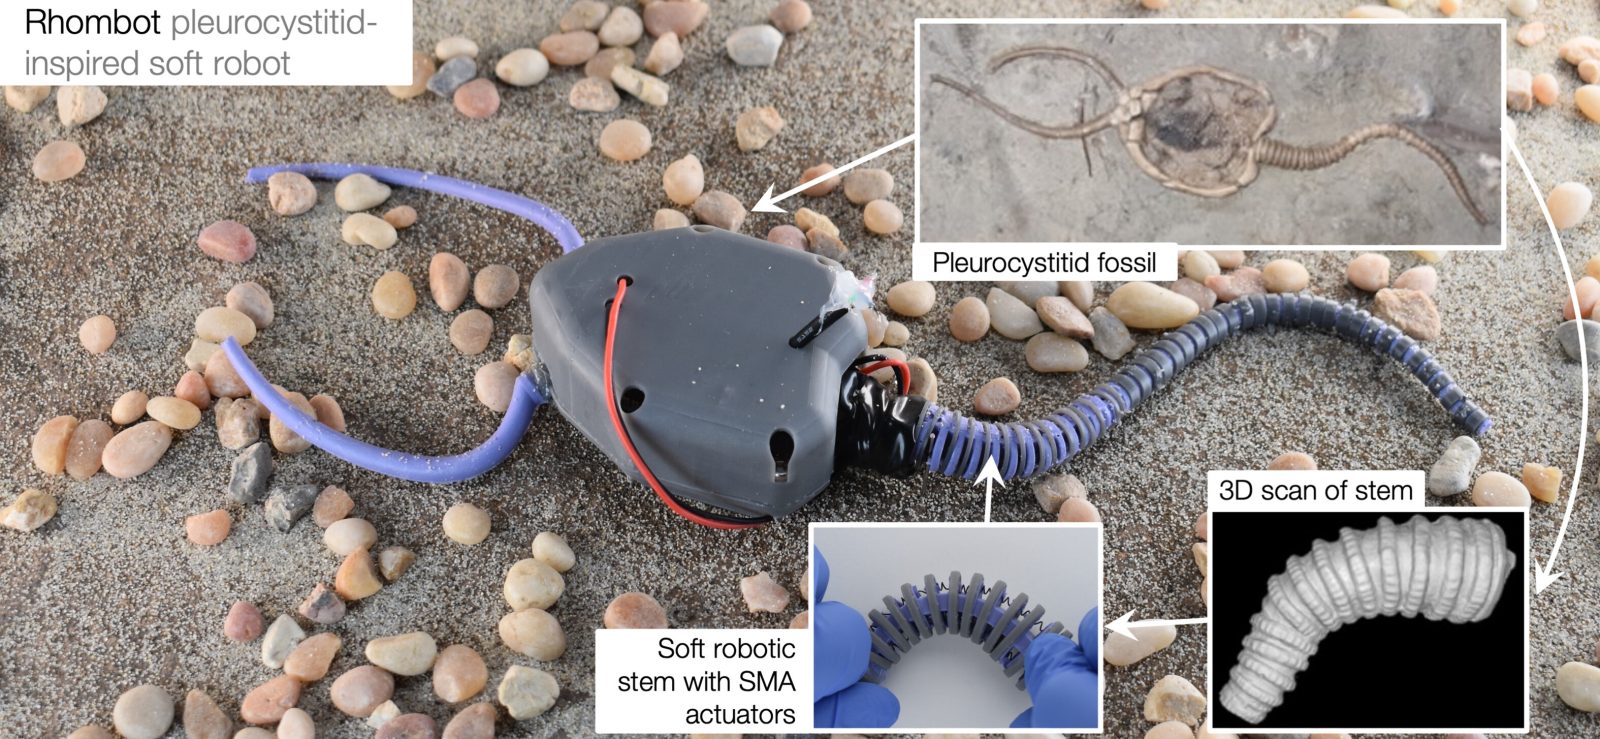 Robot Rhombot oparty na morfologii organizmu morskiego (źródło: pnas.org)